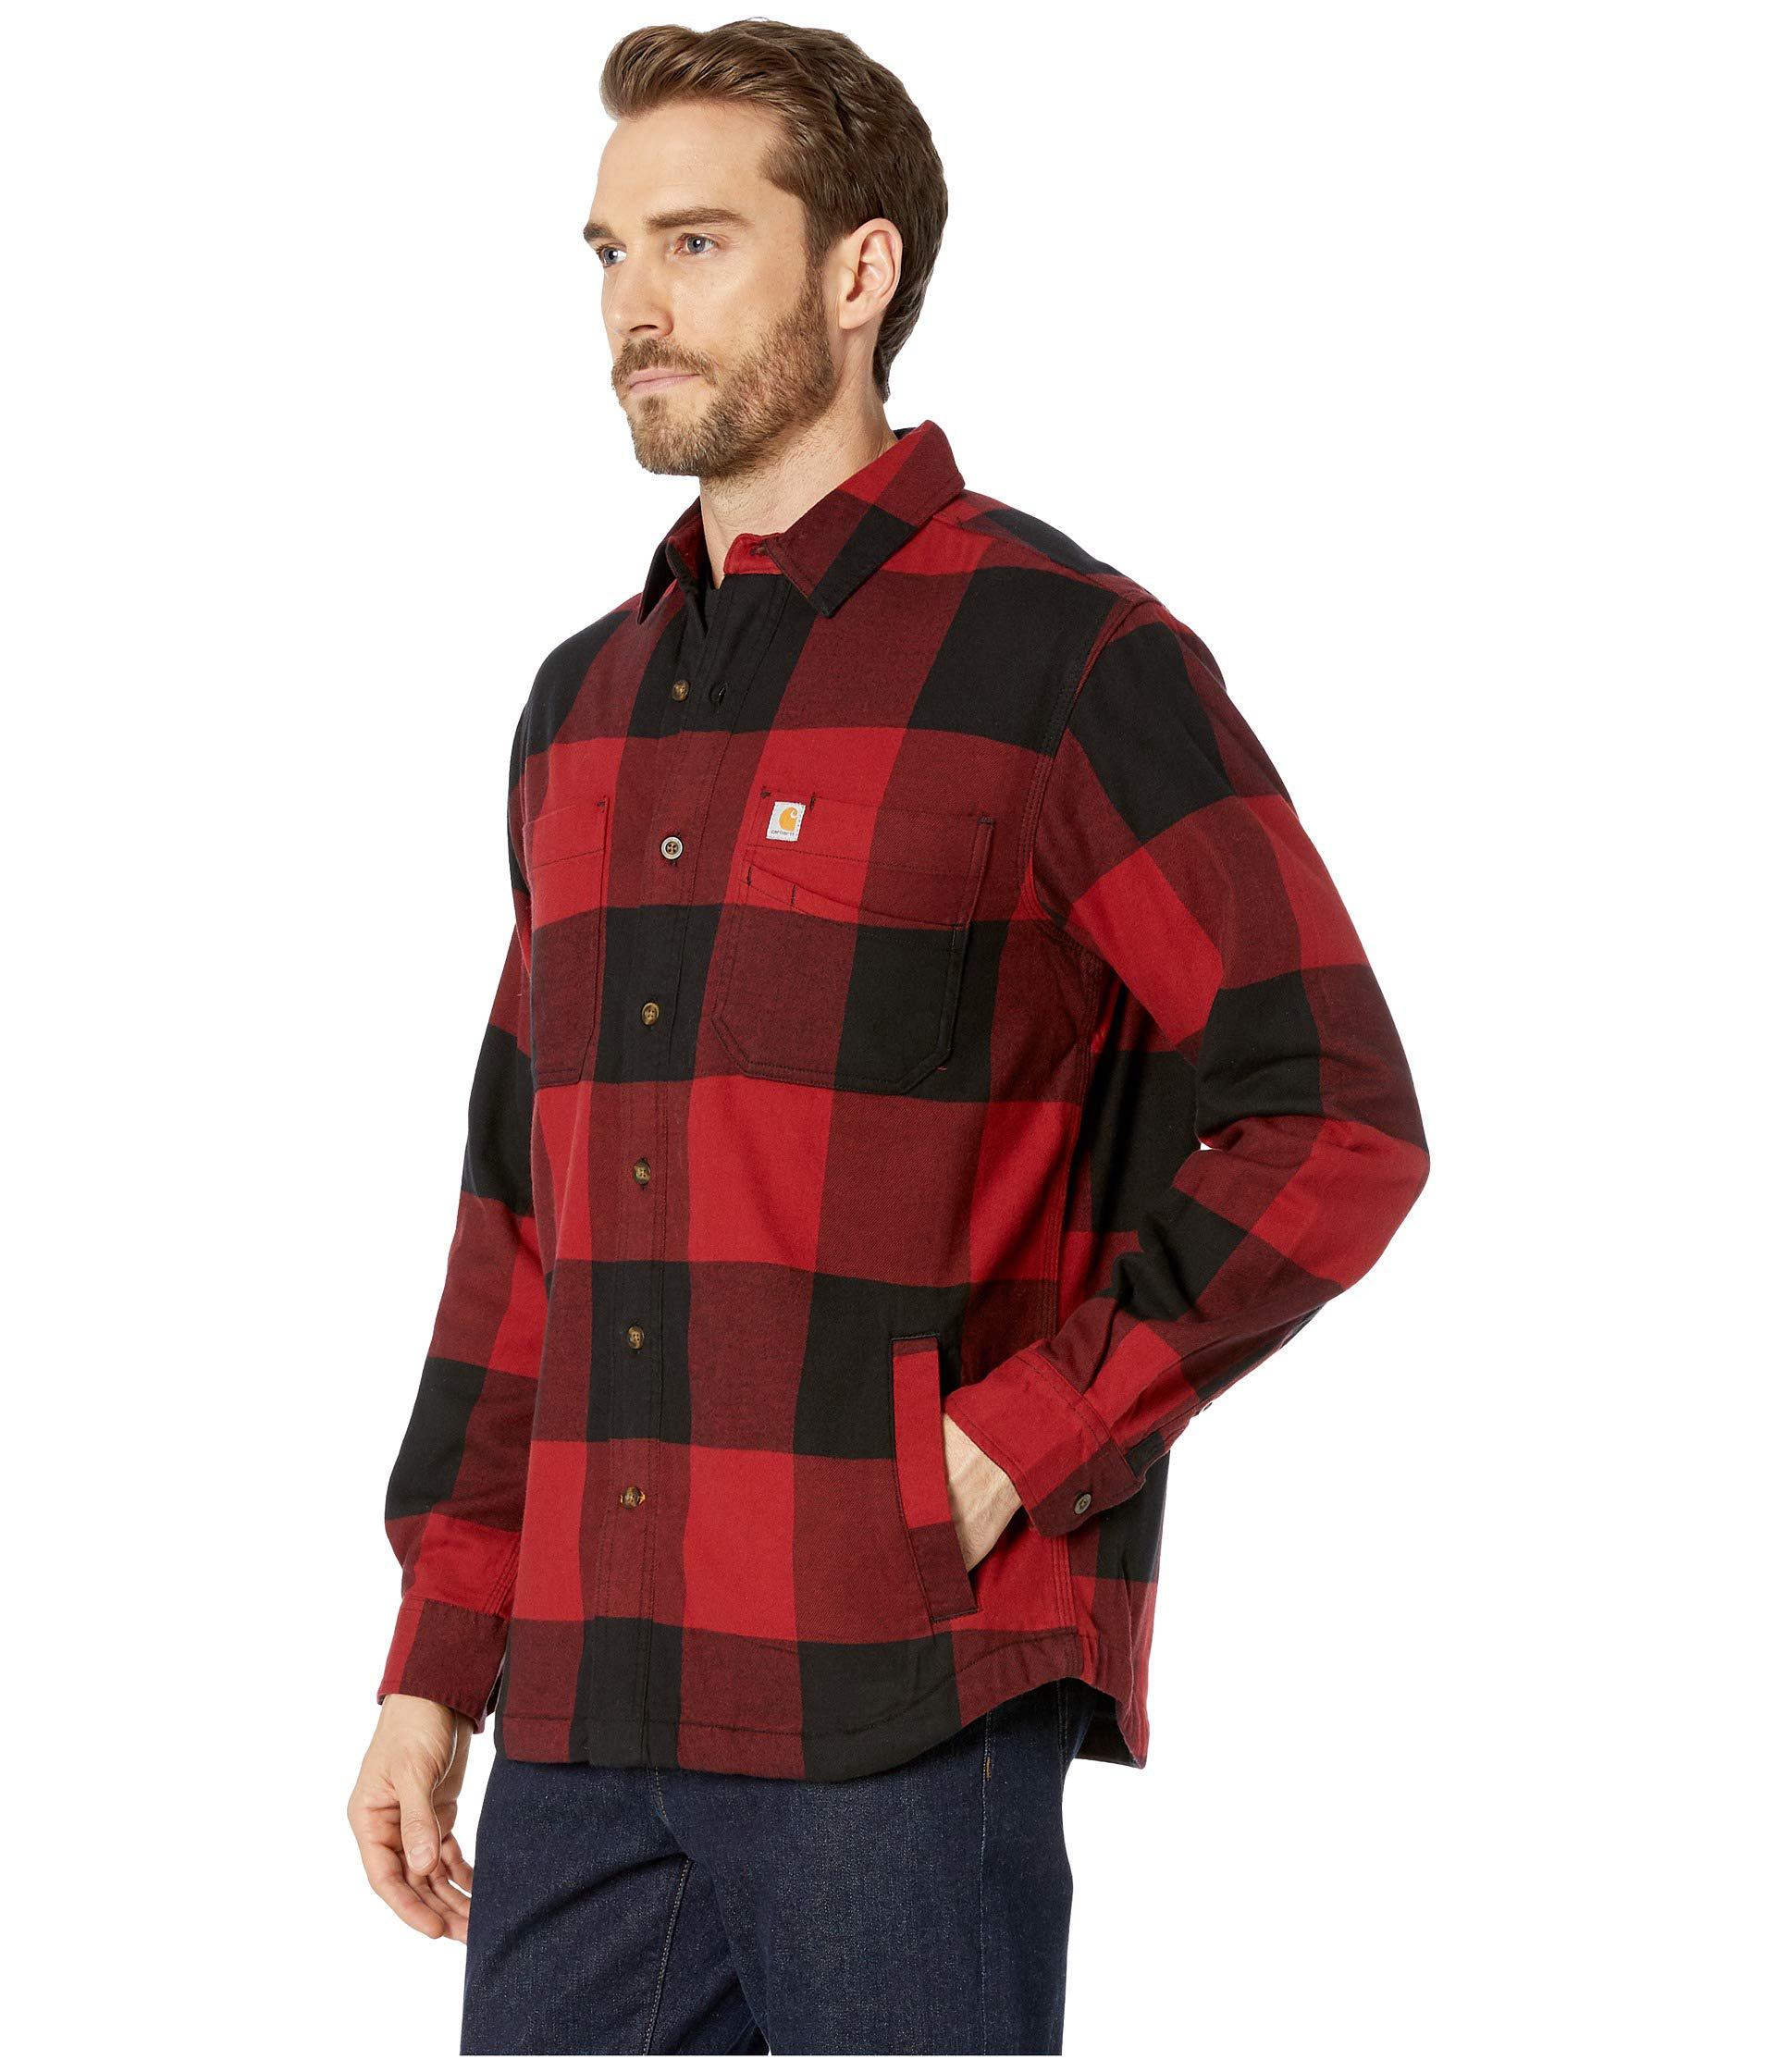 Carhartt Mens Rugged Flex Hamilton Fleece Lined Shirt Regular and Big & Tall Sizes